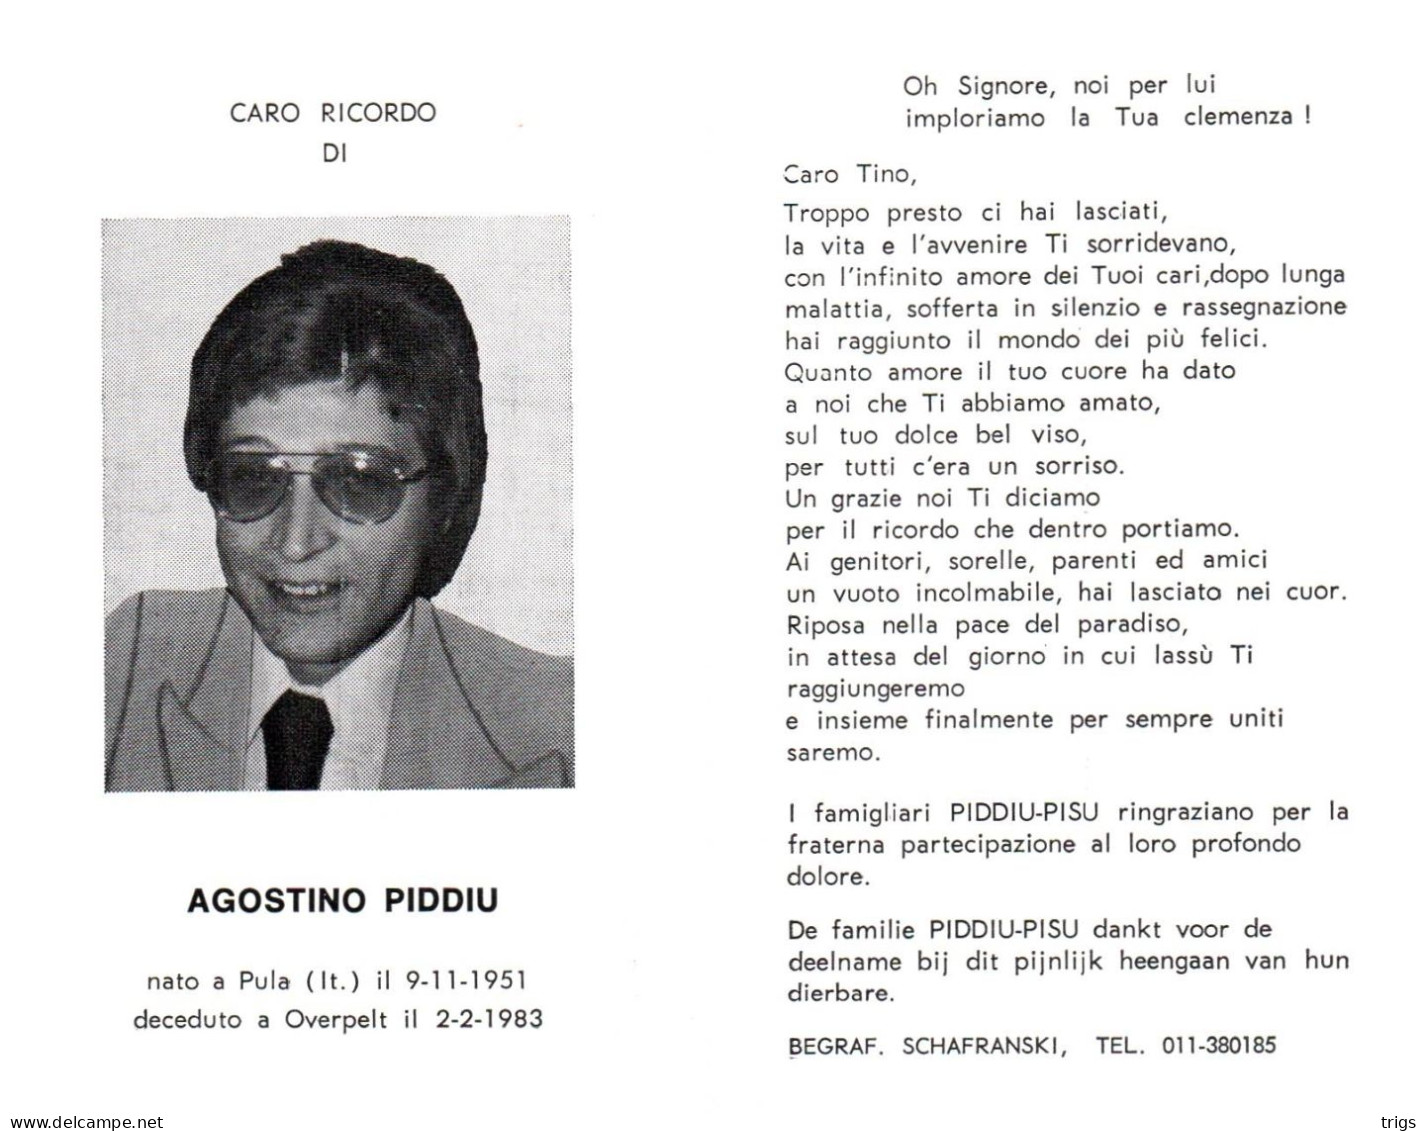 Agostino Piddiu (1951-1983) - Santini